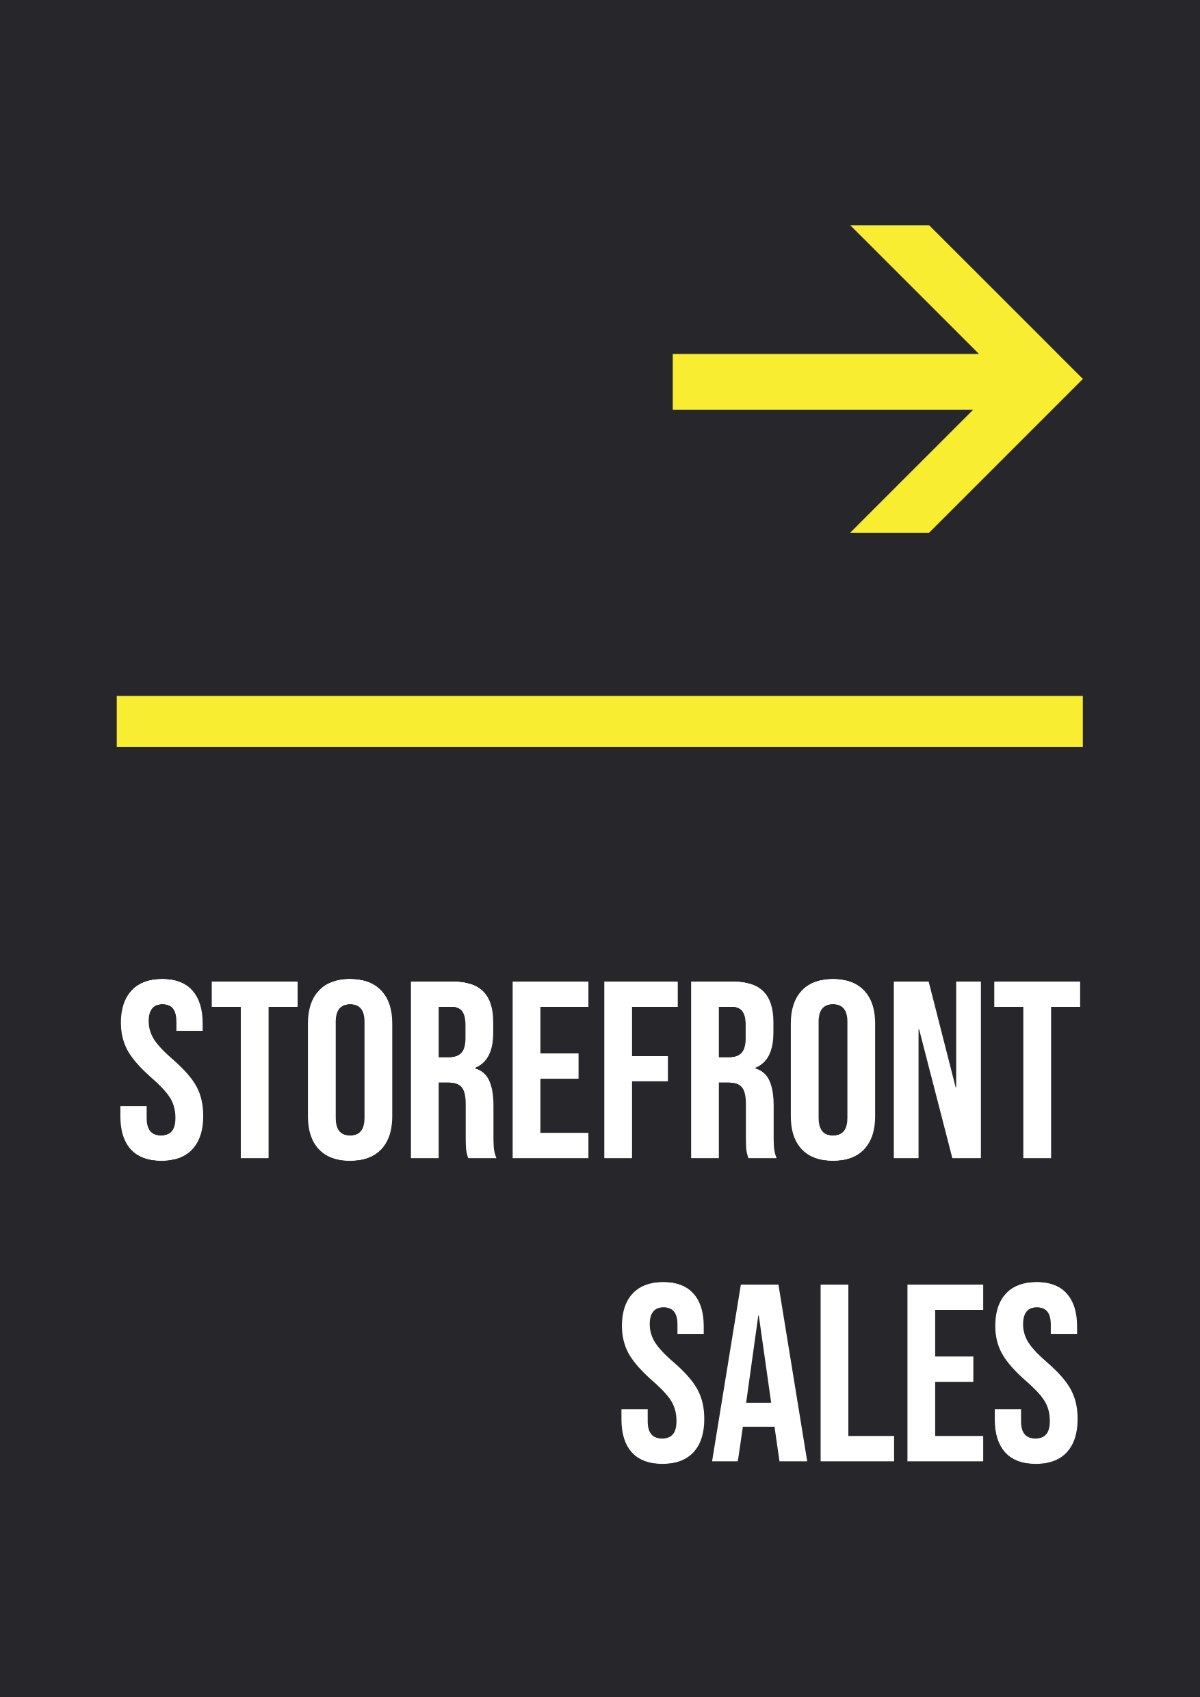 Storefront Sales Signage Template